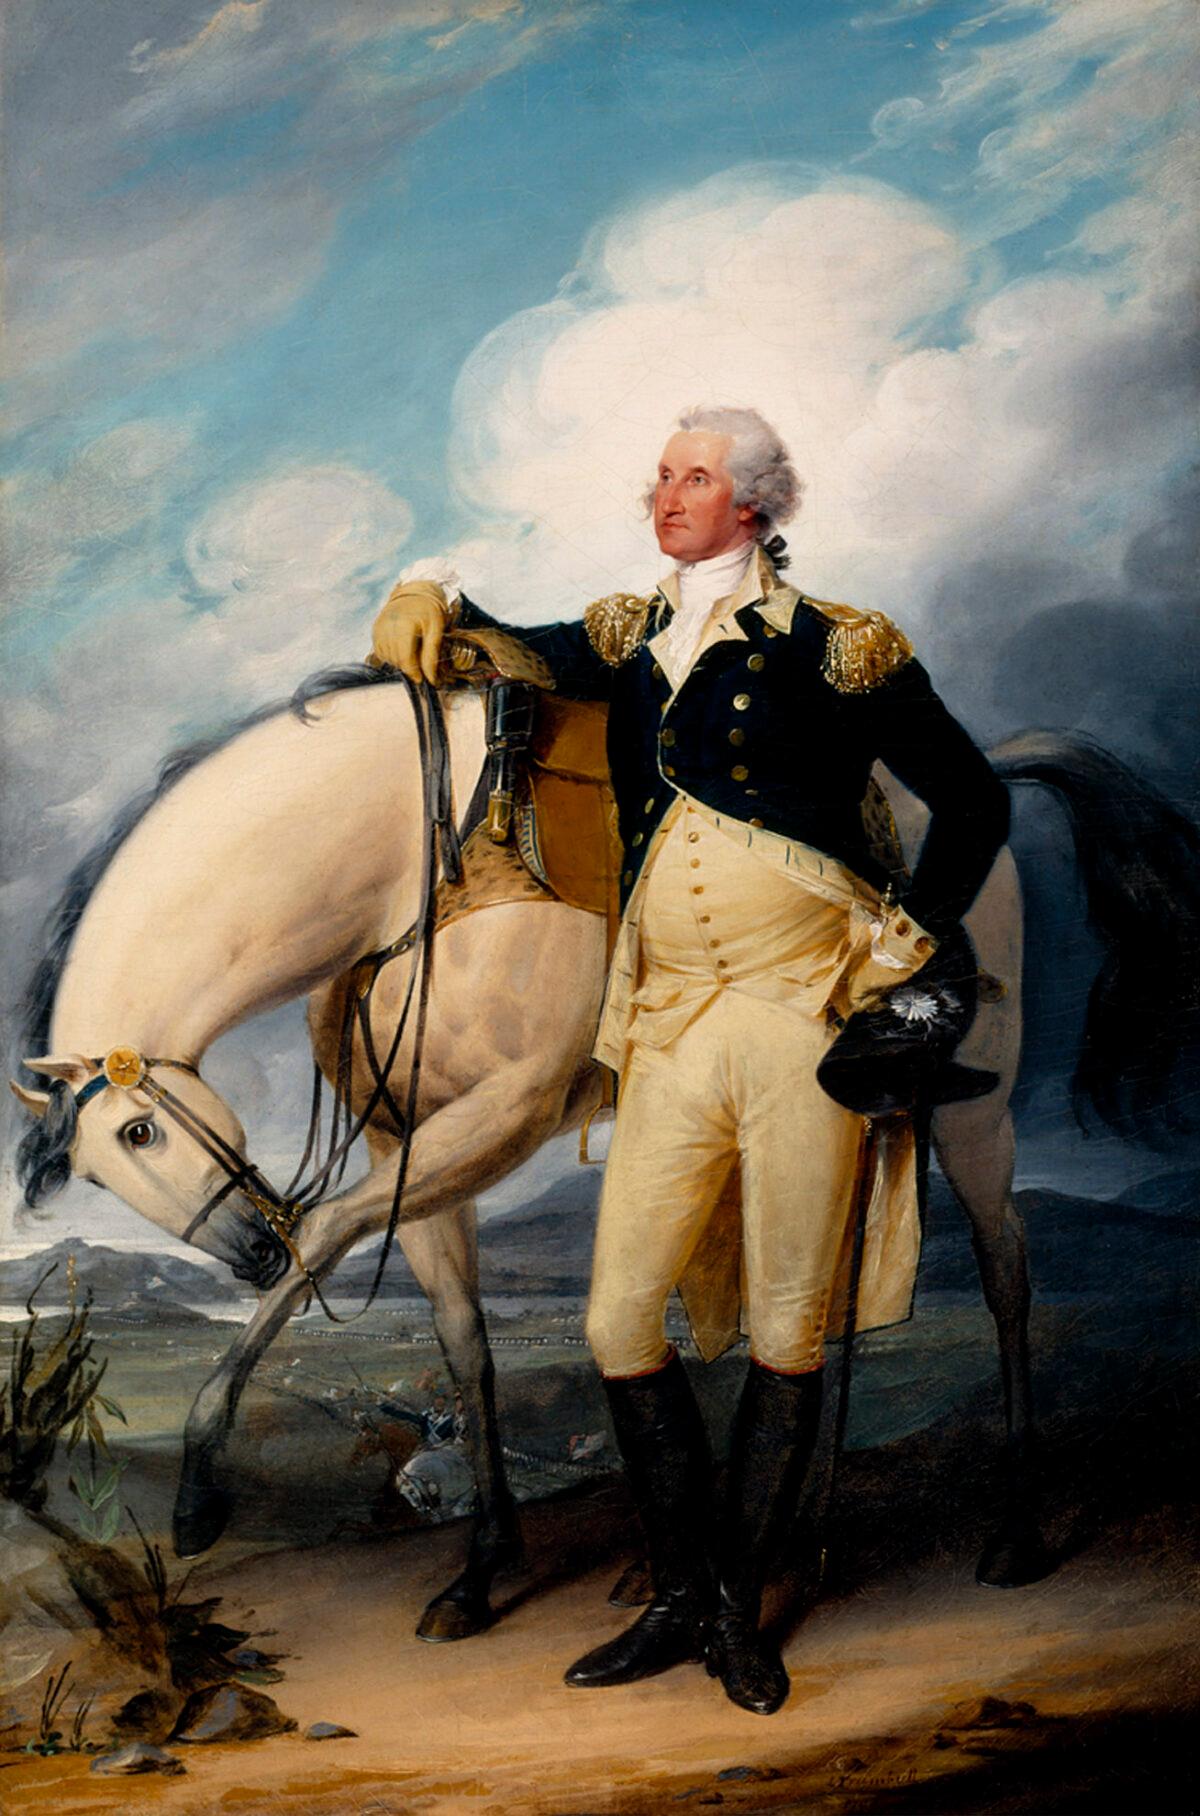 John Trumbull "Washington at Verplanck’s Point" circa 1790. Oil on canvas. Winterhur Museum, Garden and Library Winterhur, Delaware.